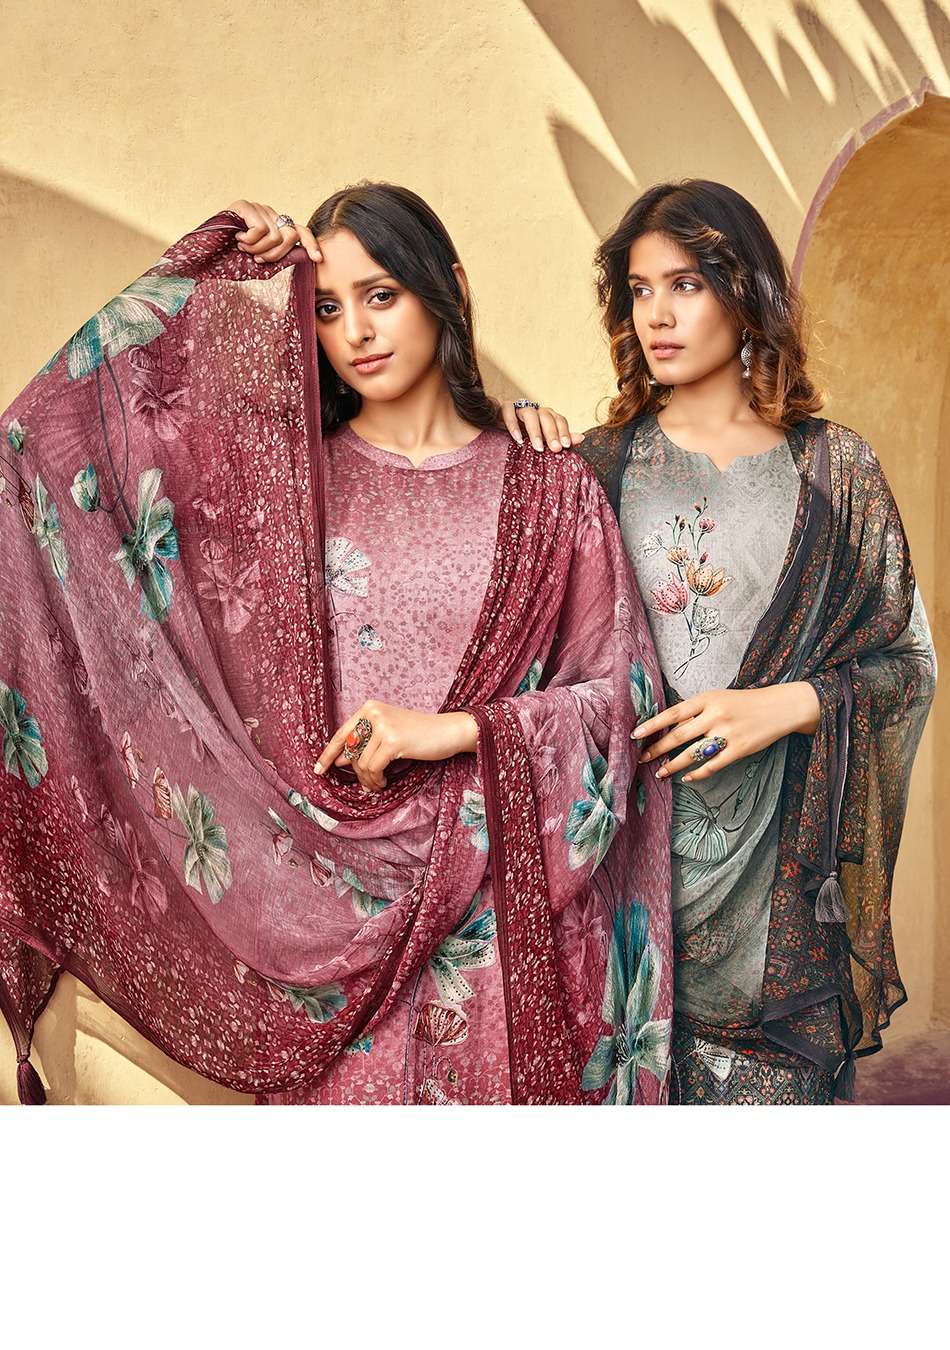 rupali fashion lub vol-2 3501-3506 series indian designer salwar kameez catalogue manufacturer surat